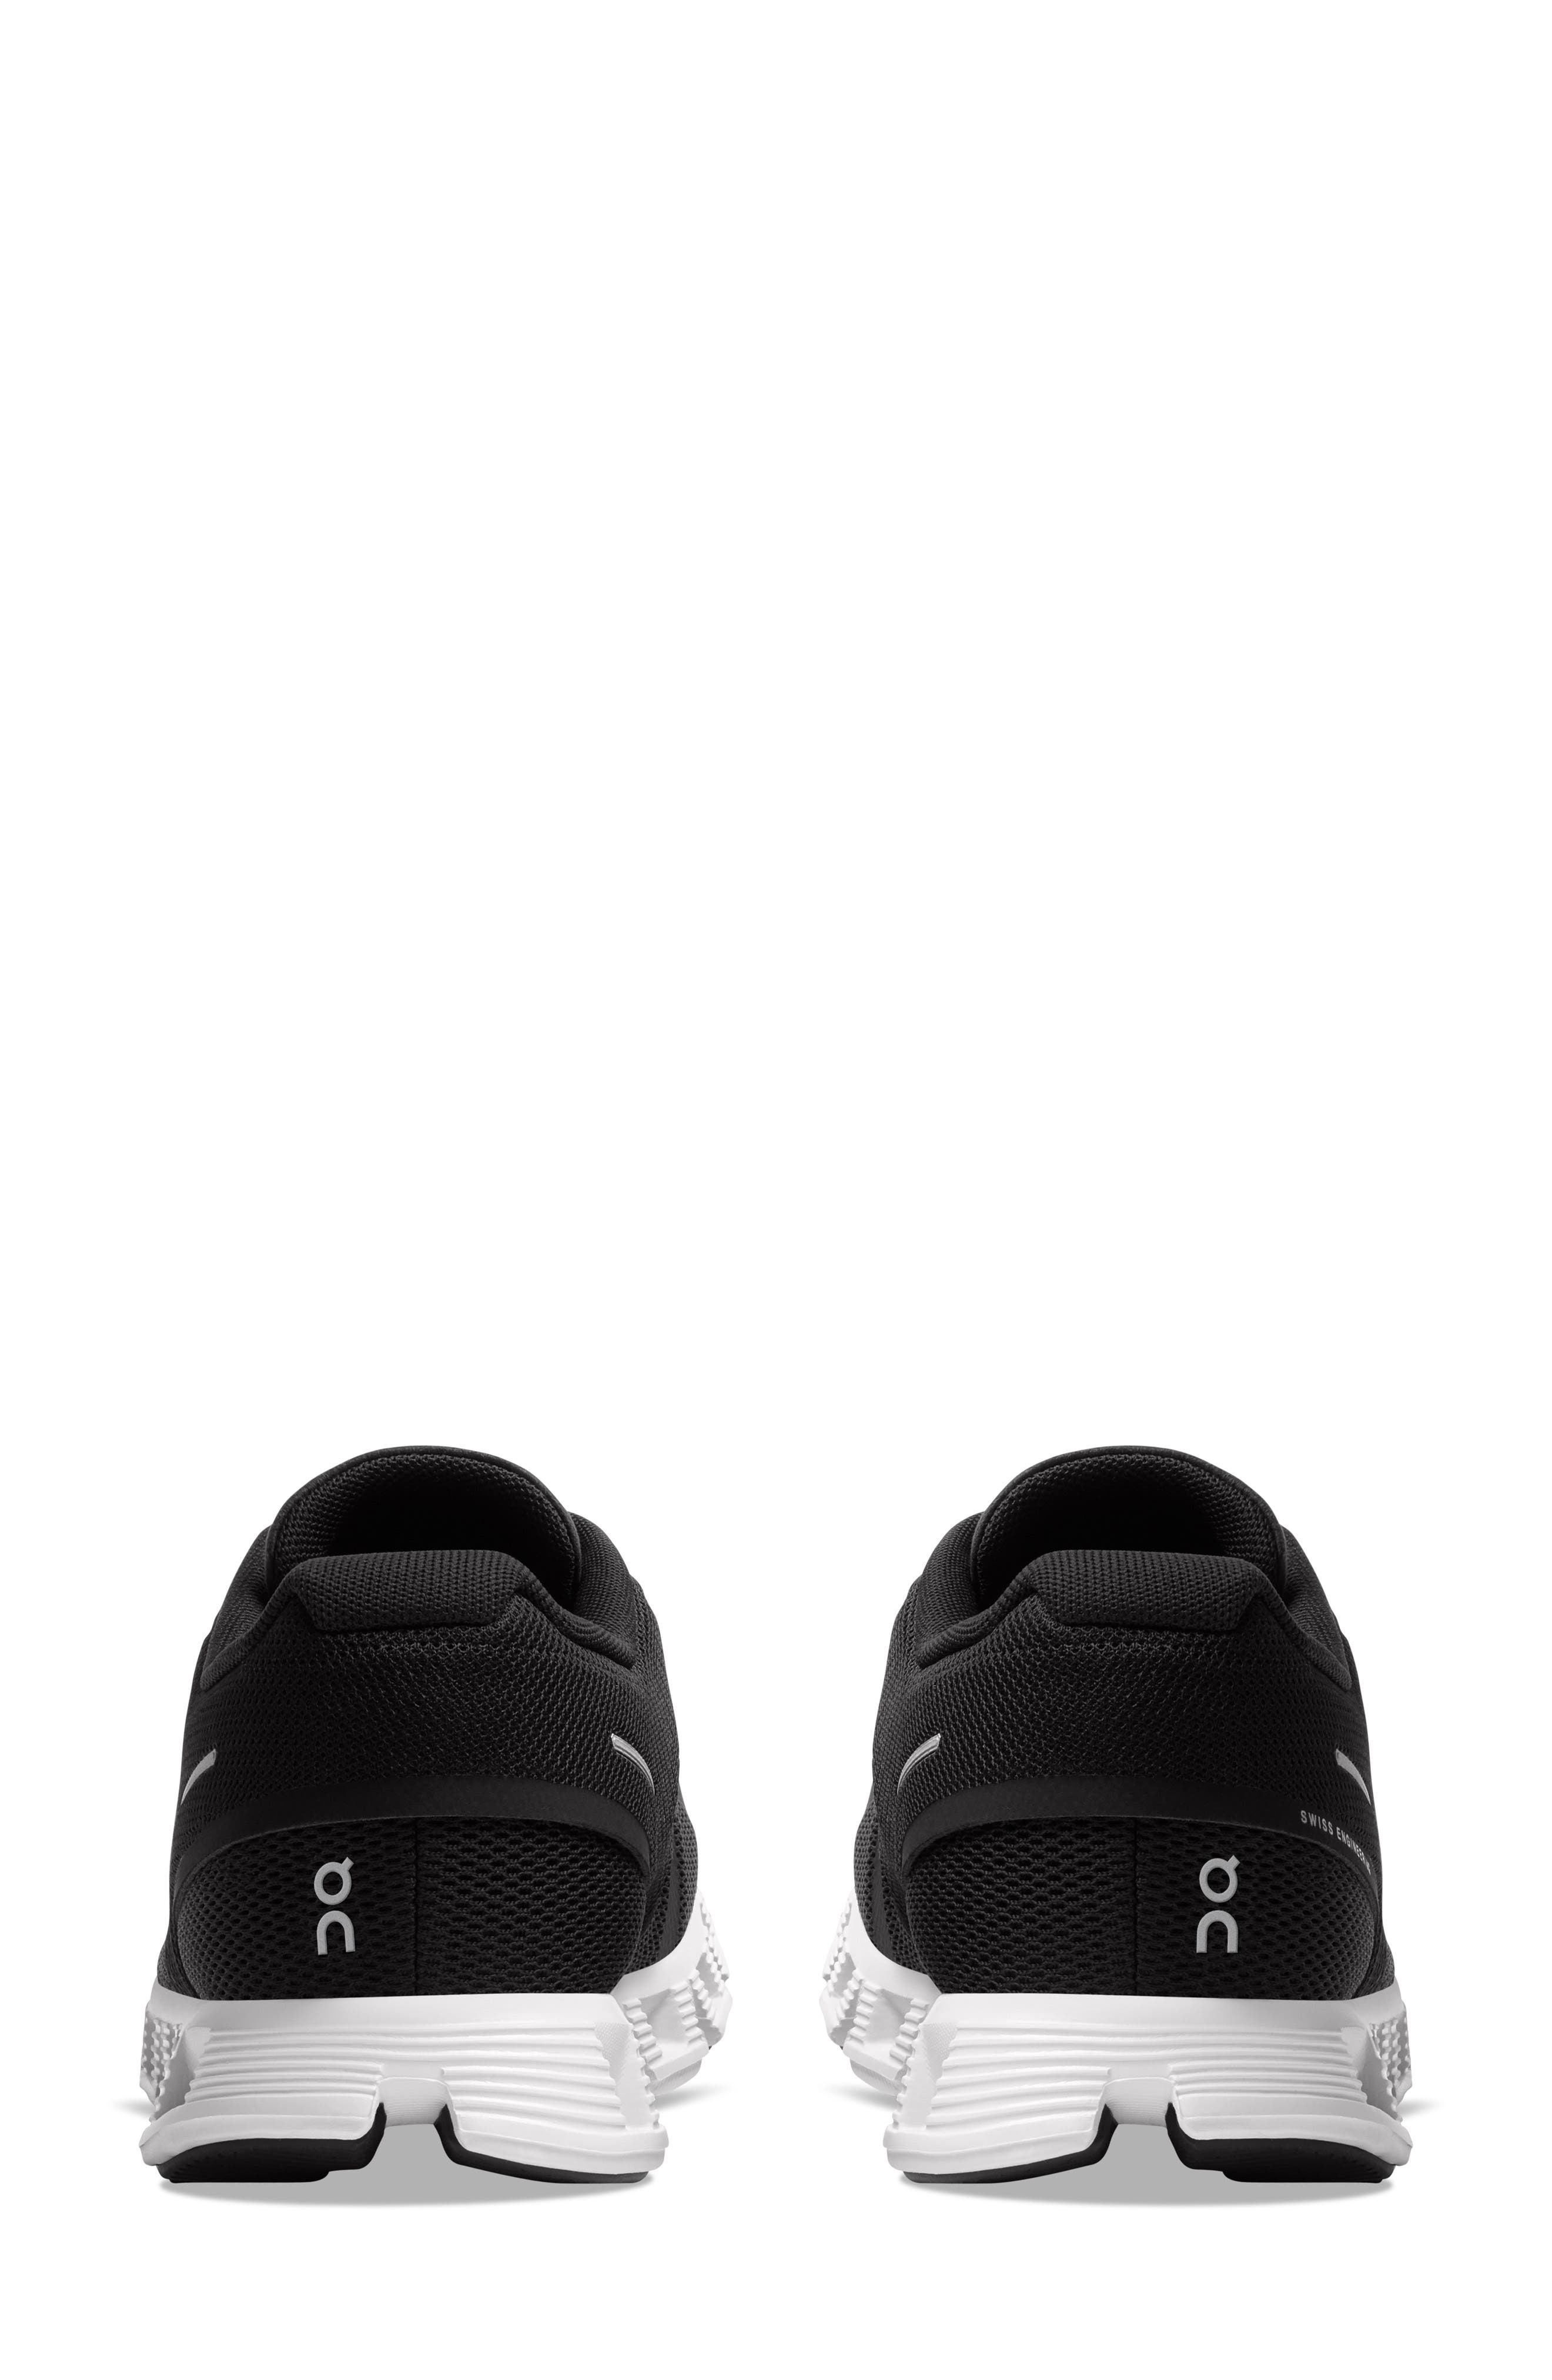 Cloud 5 Running Shoe in Black/White - 2